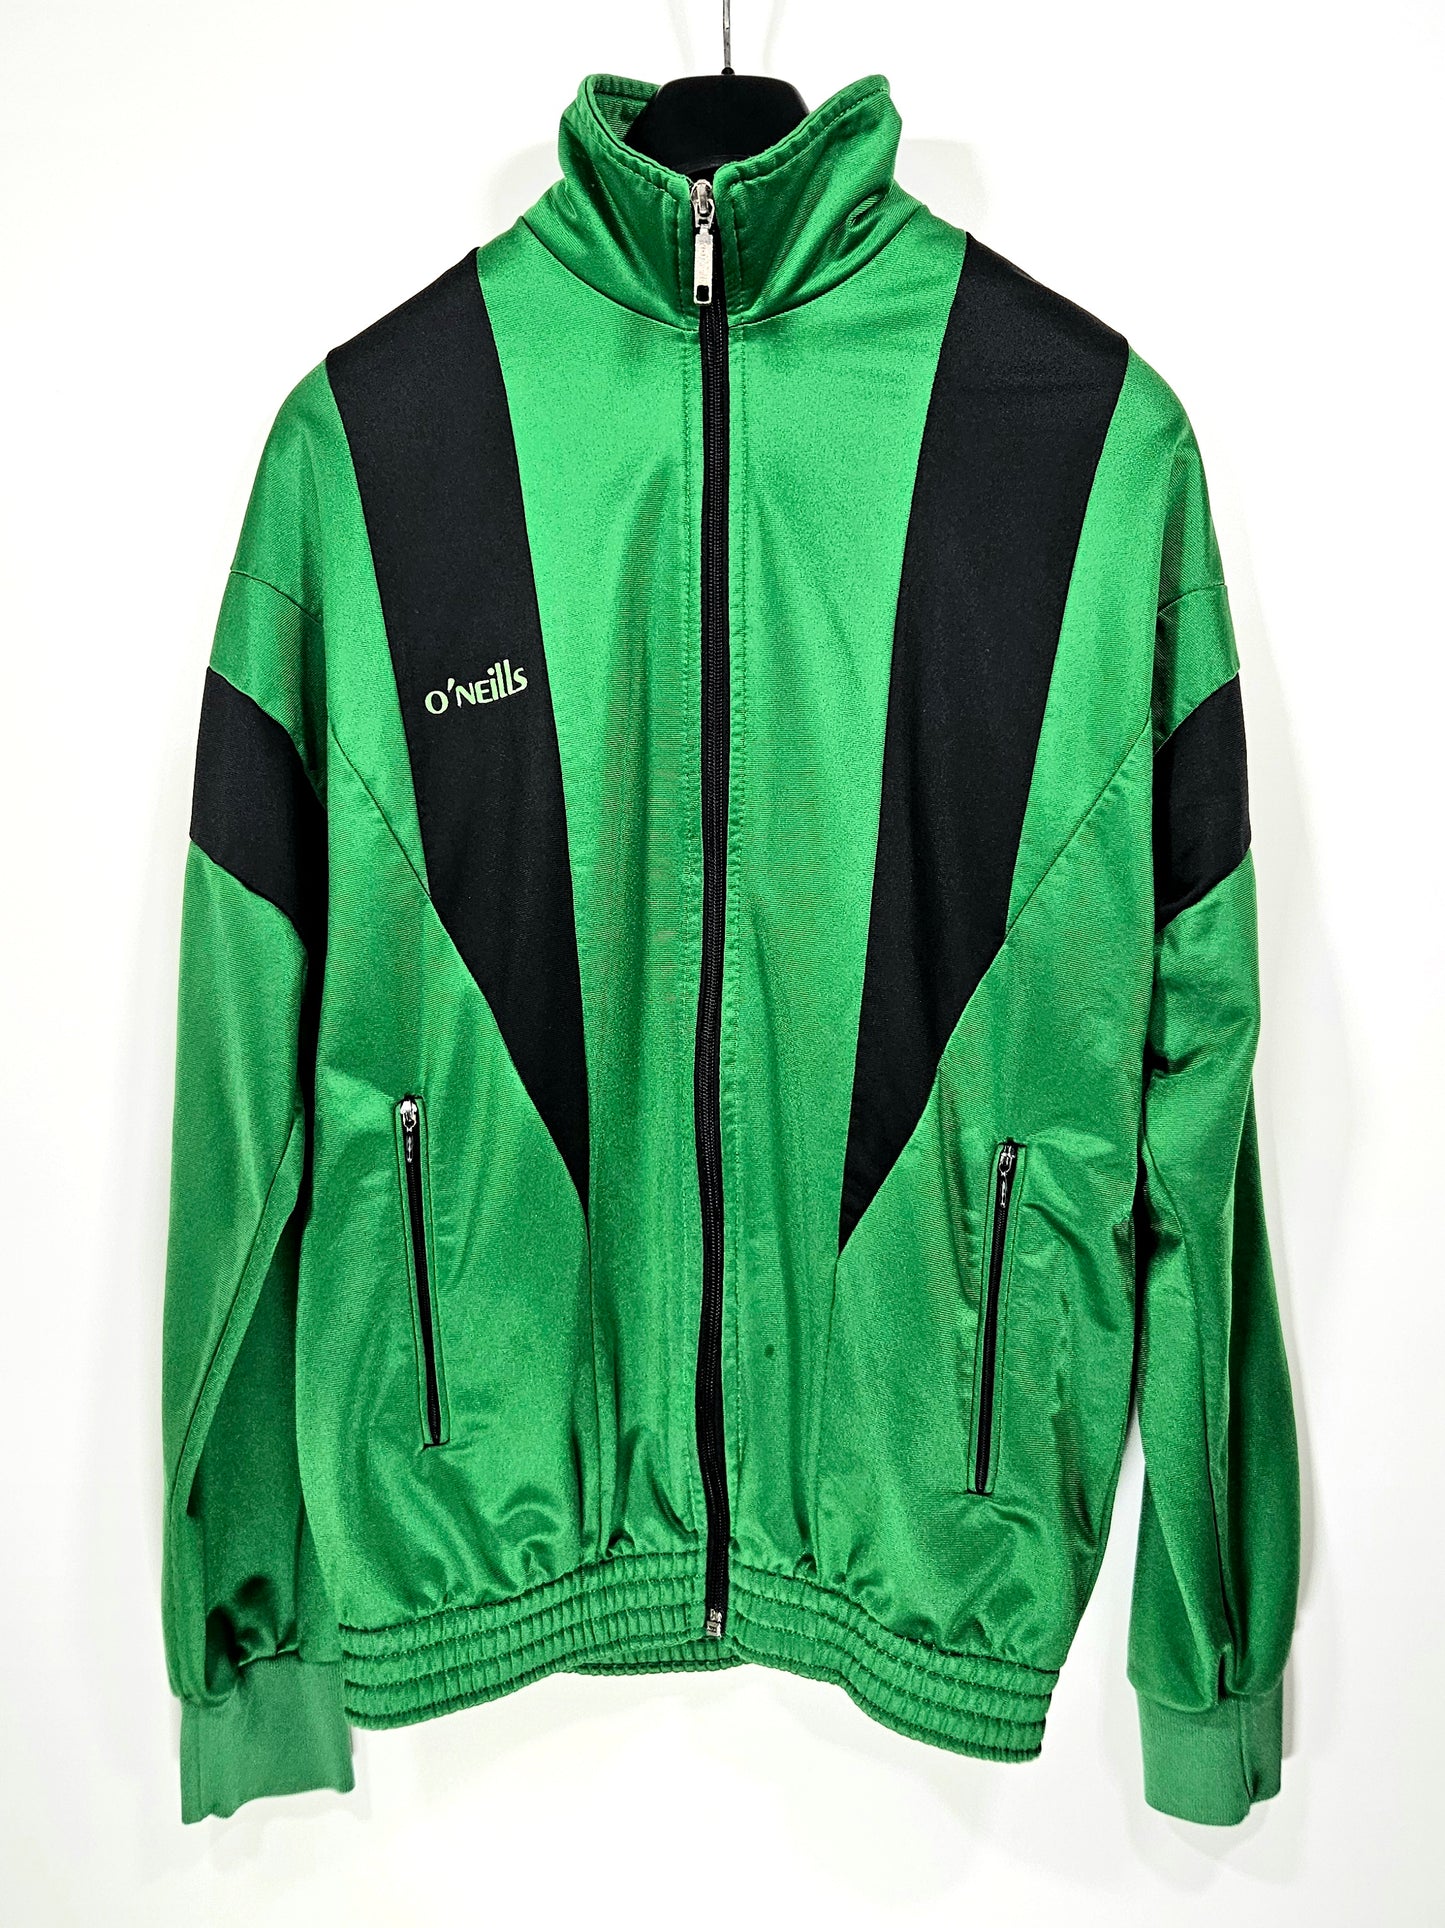 O'Neills Jacket 1990s (M)